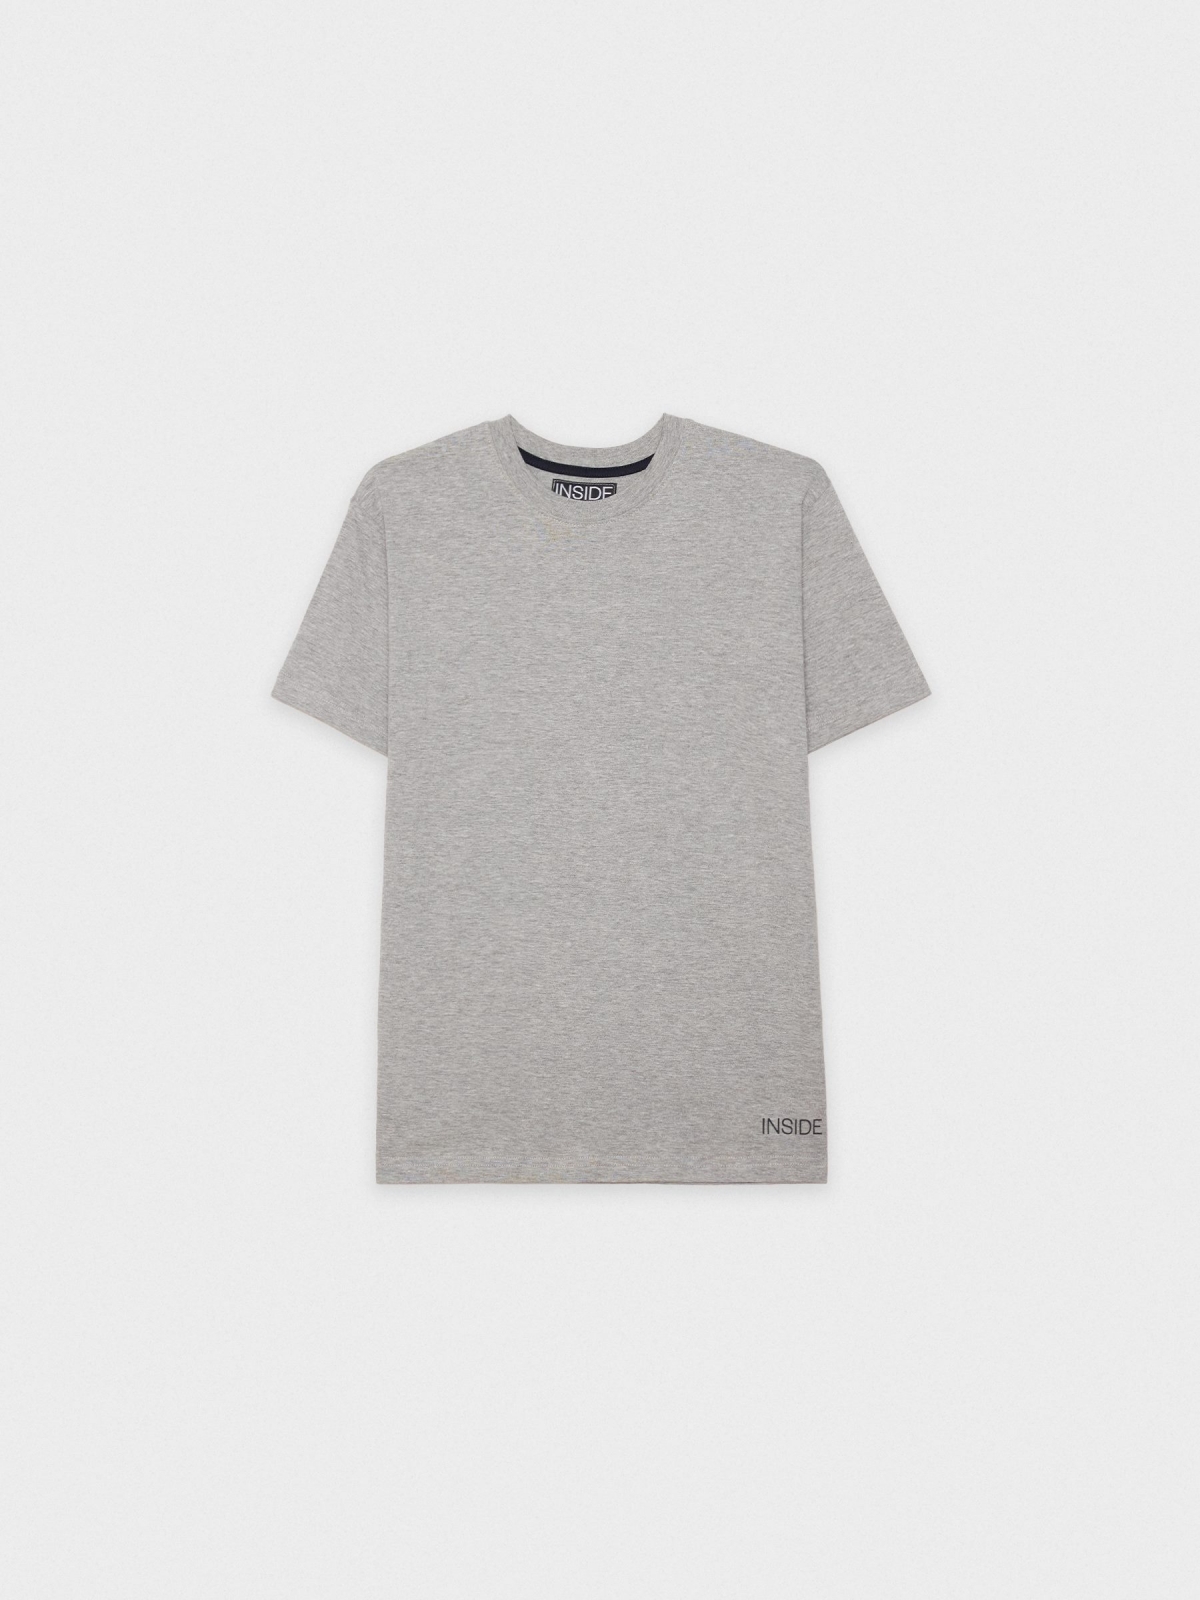  T-shirt básica de manga curta cinza